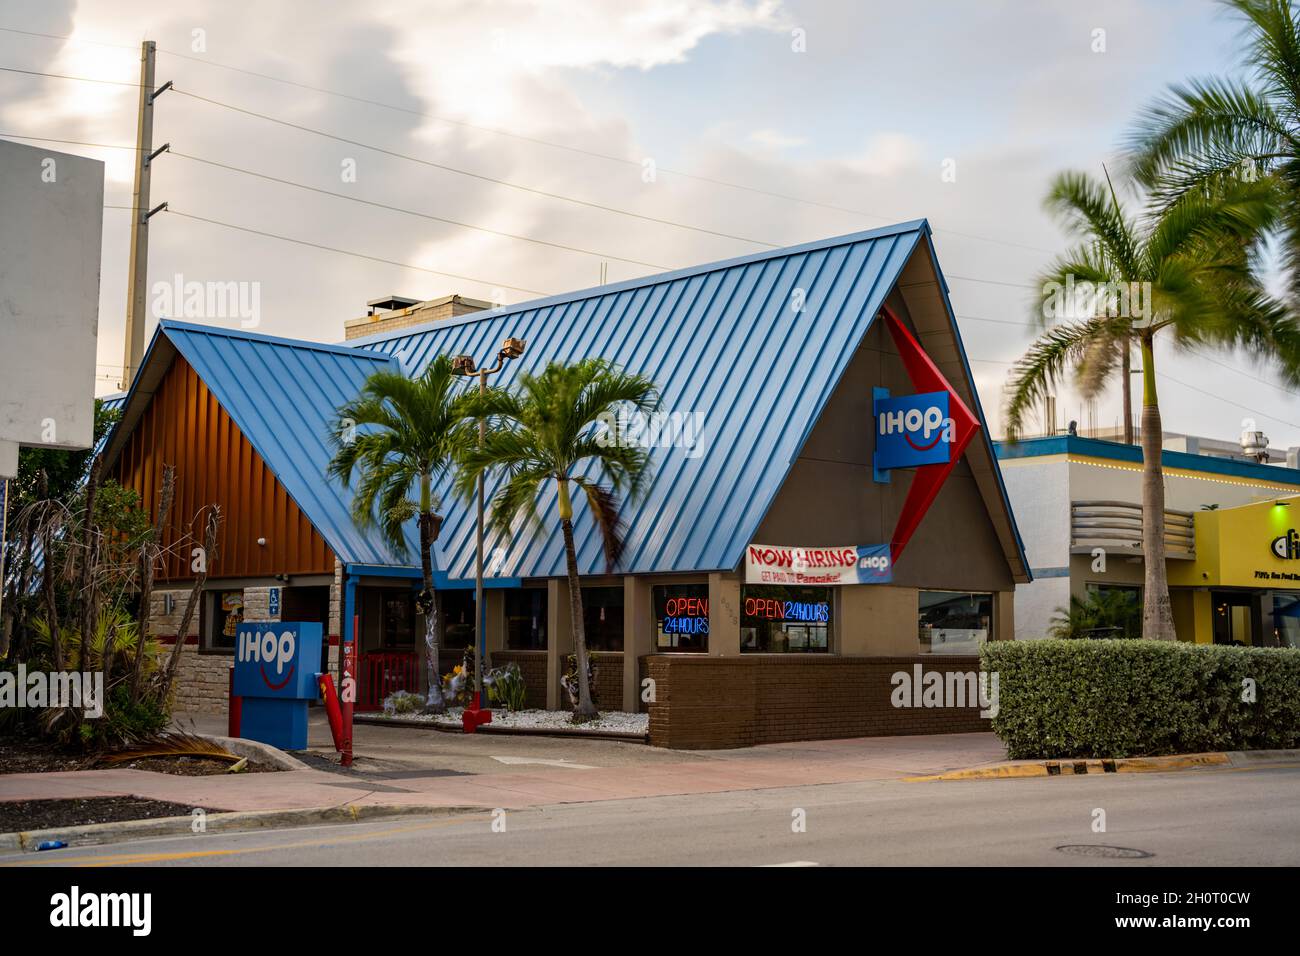 Miami Beach, FL, USA - October 13, 2021: Ihop Restaurant Miami Beach now hiring sign posted Stock Photo